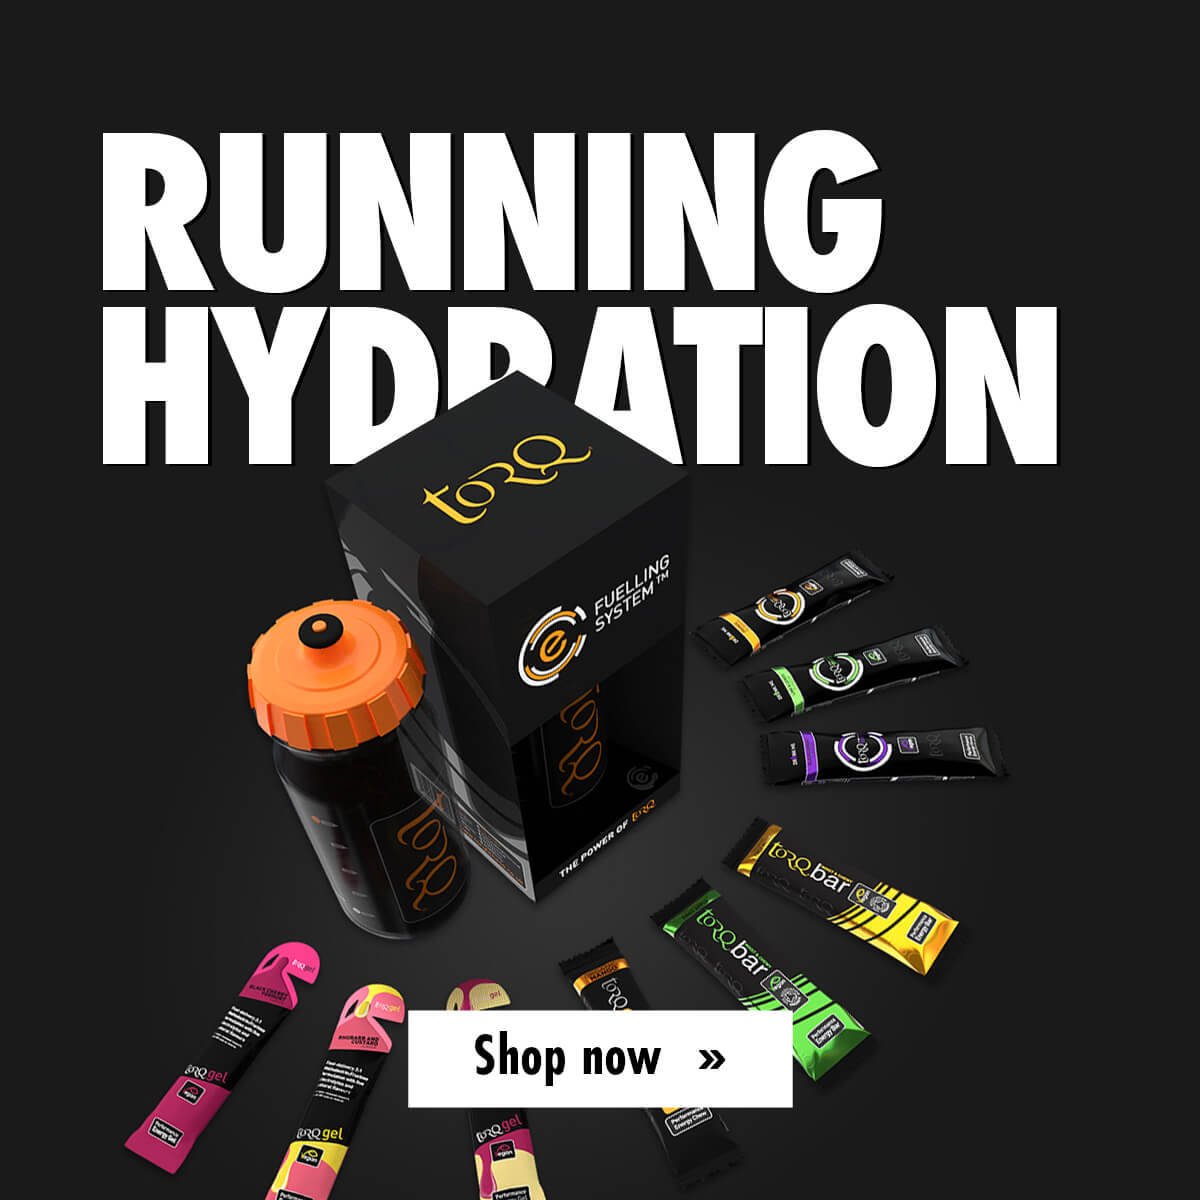 Running hydration